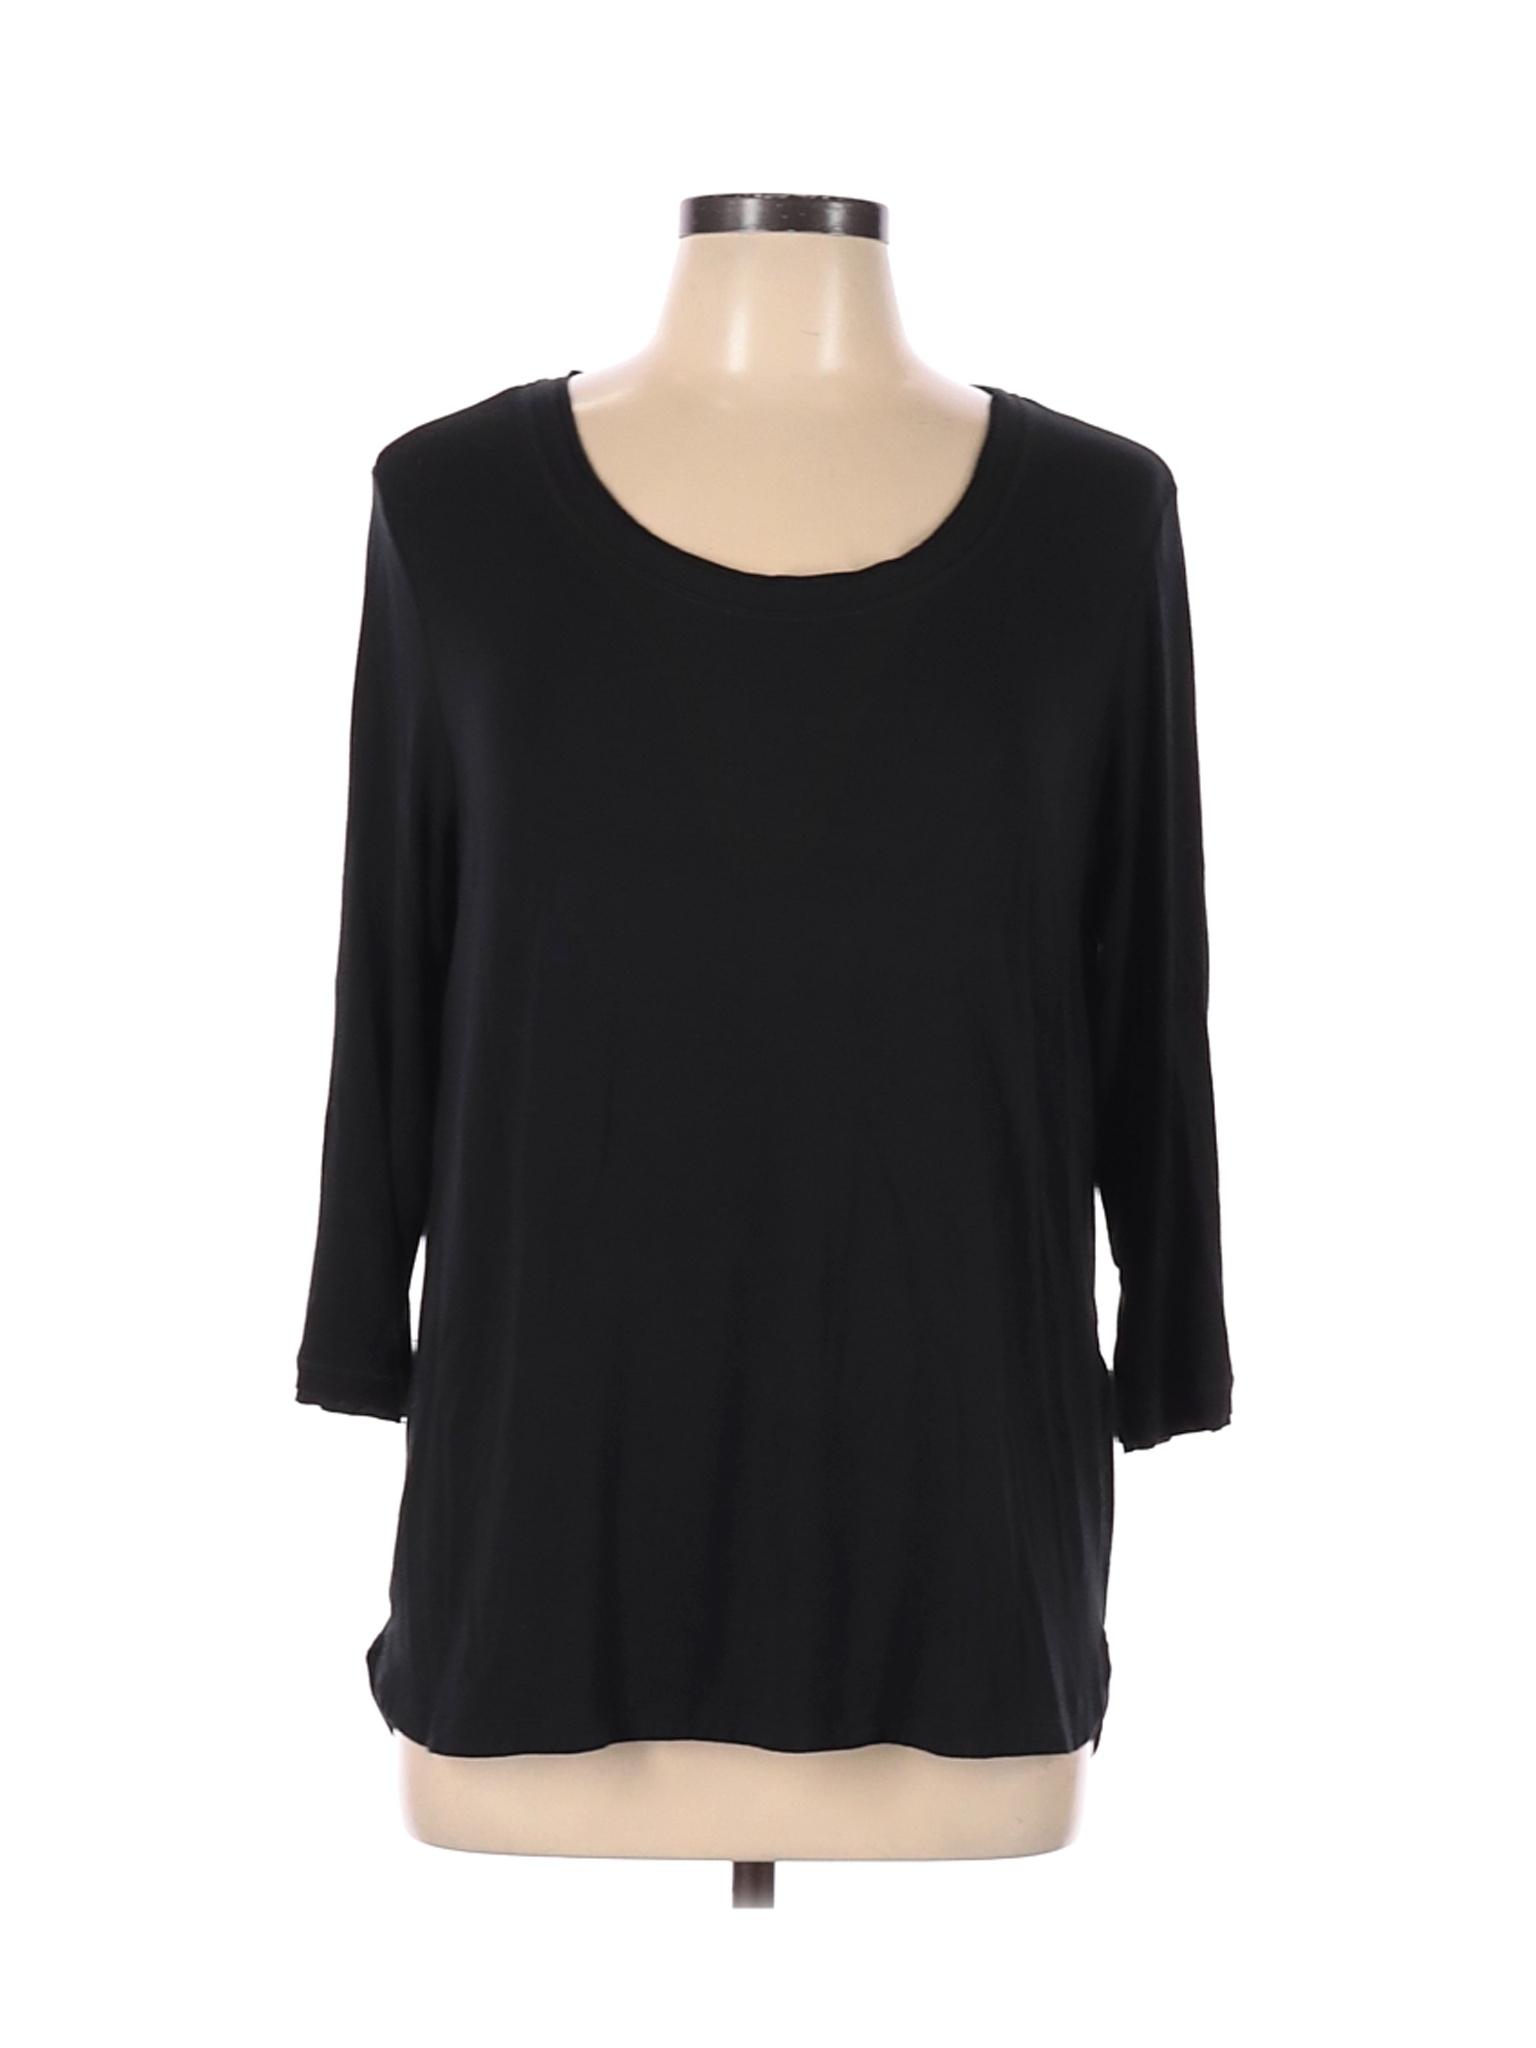 Tahari Women Black Long Sleeve T-Shirt L | eBay